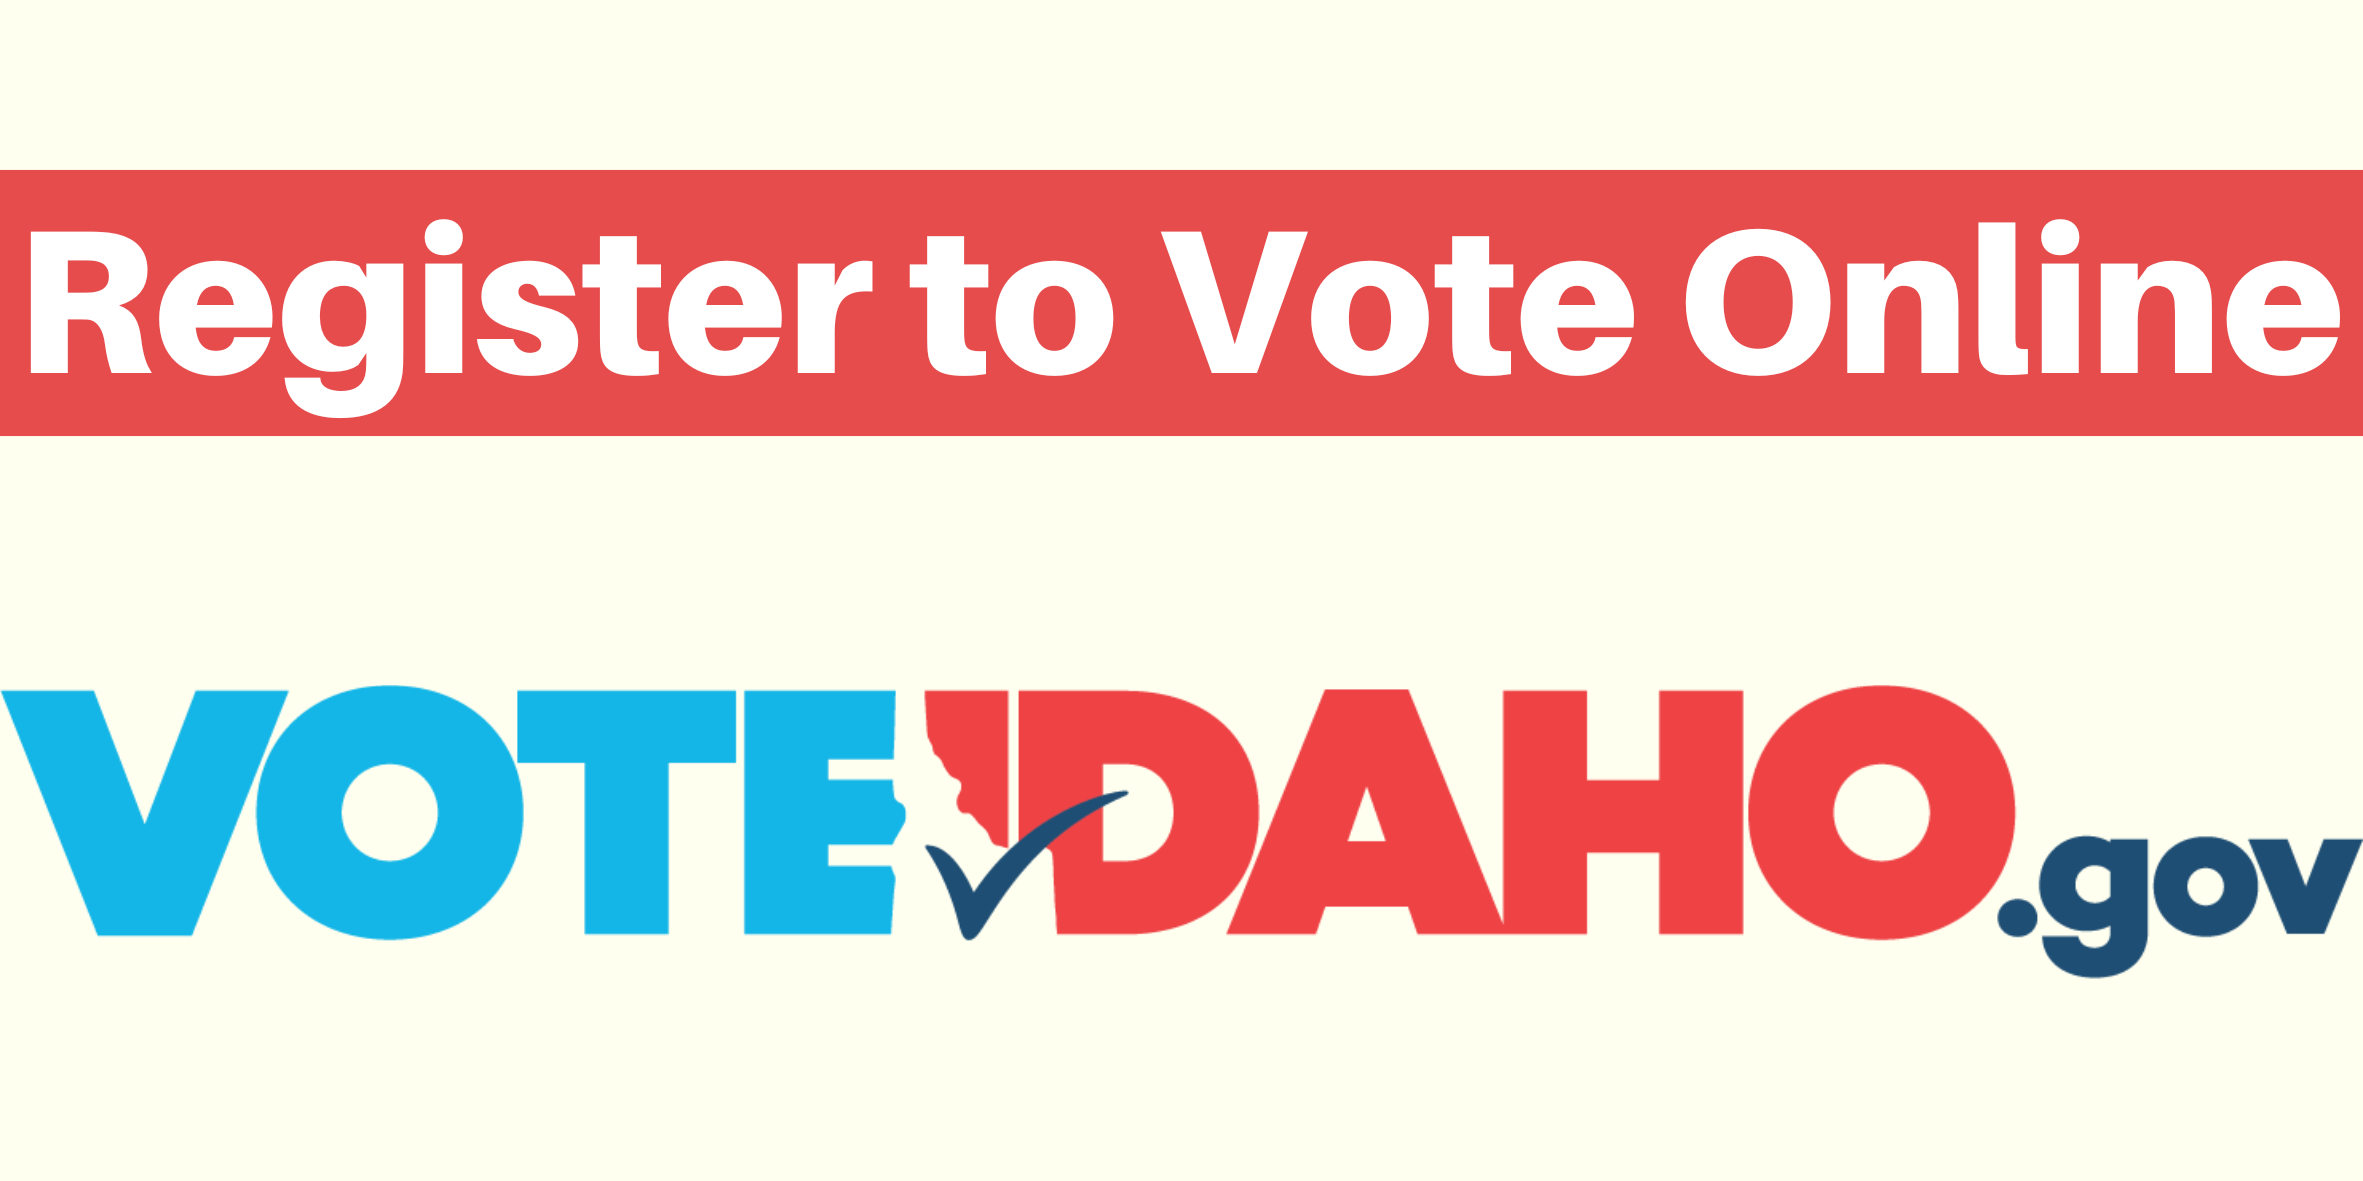 Register to Vote Online Vote Idaho.gov